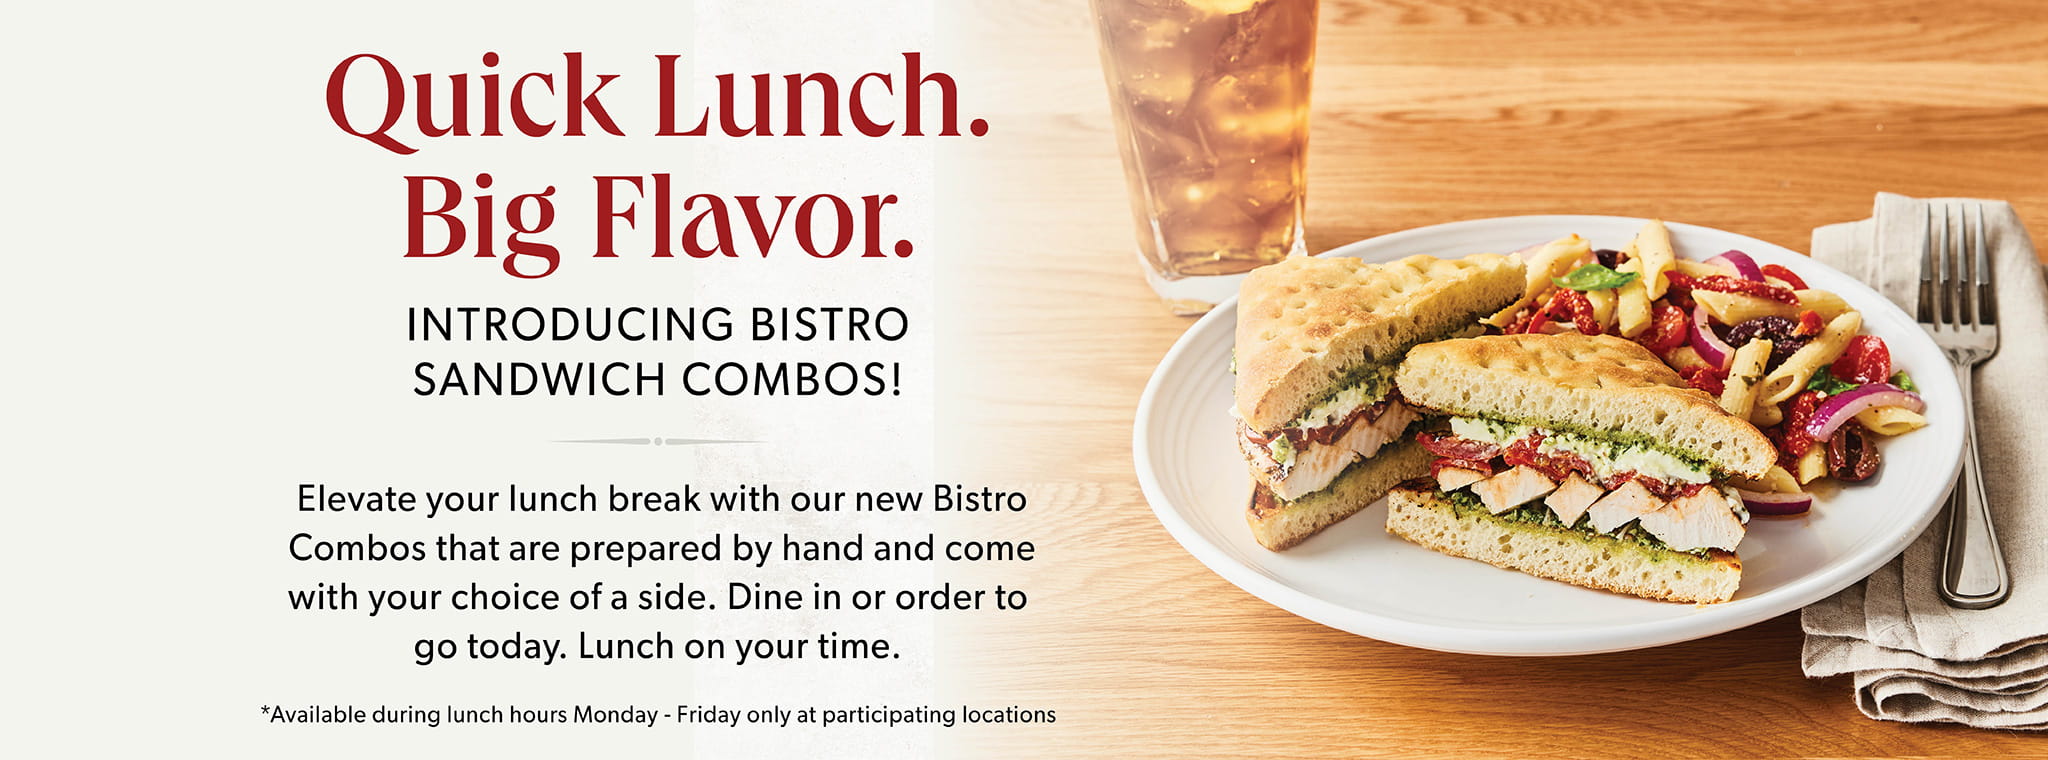 Quick Lunch. Big Flavor. Introducing Bistro Sandwich Combos!